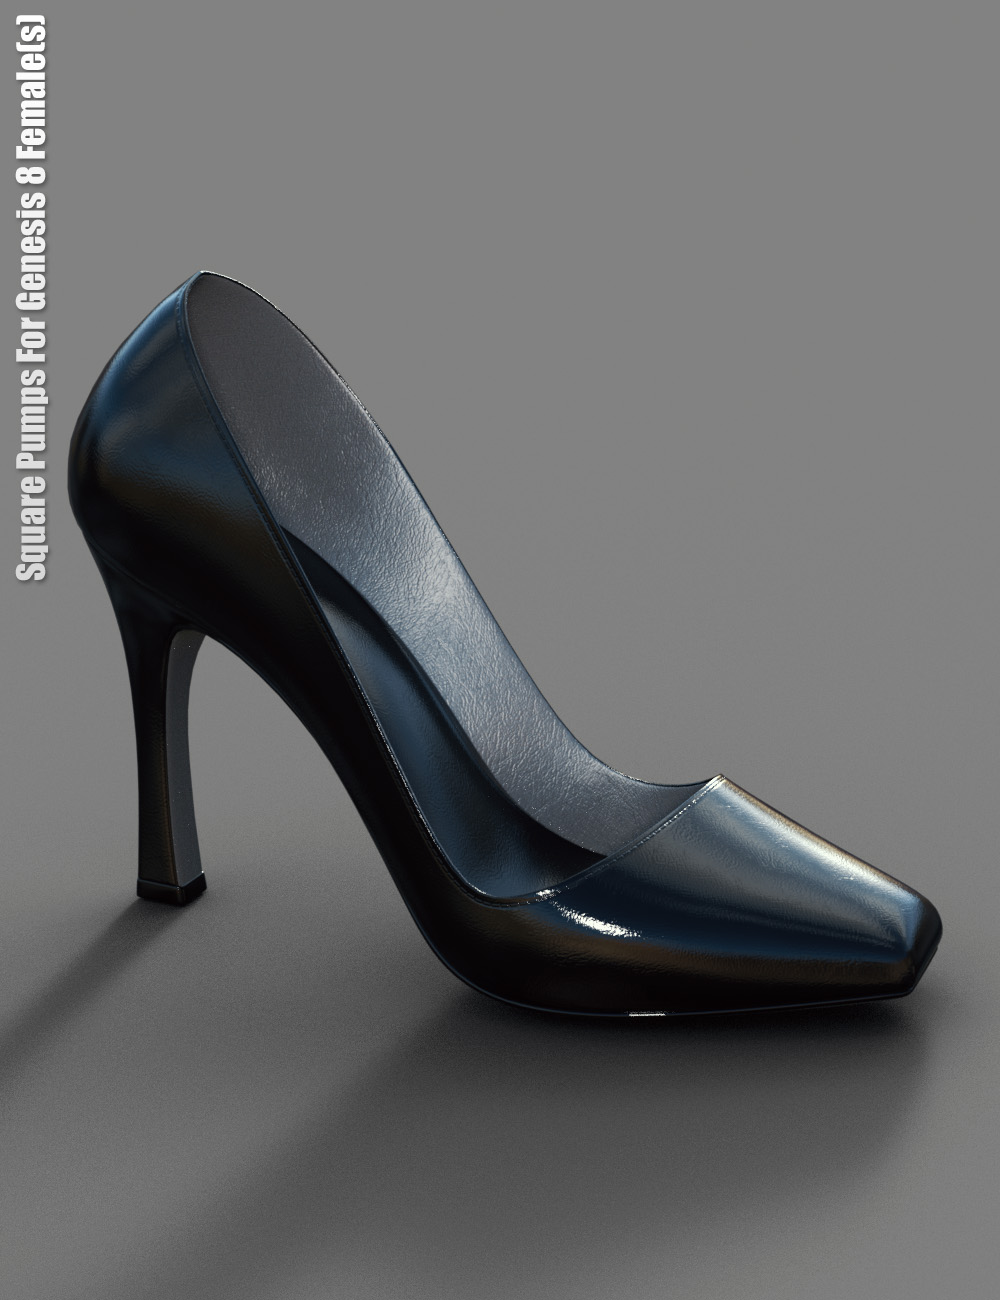 Square Pumps for Genesis 8 Female(s) by: dx30, 3D Models by Daz 3D